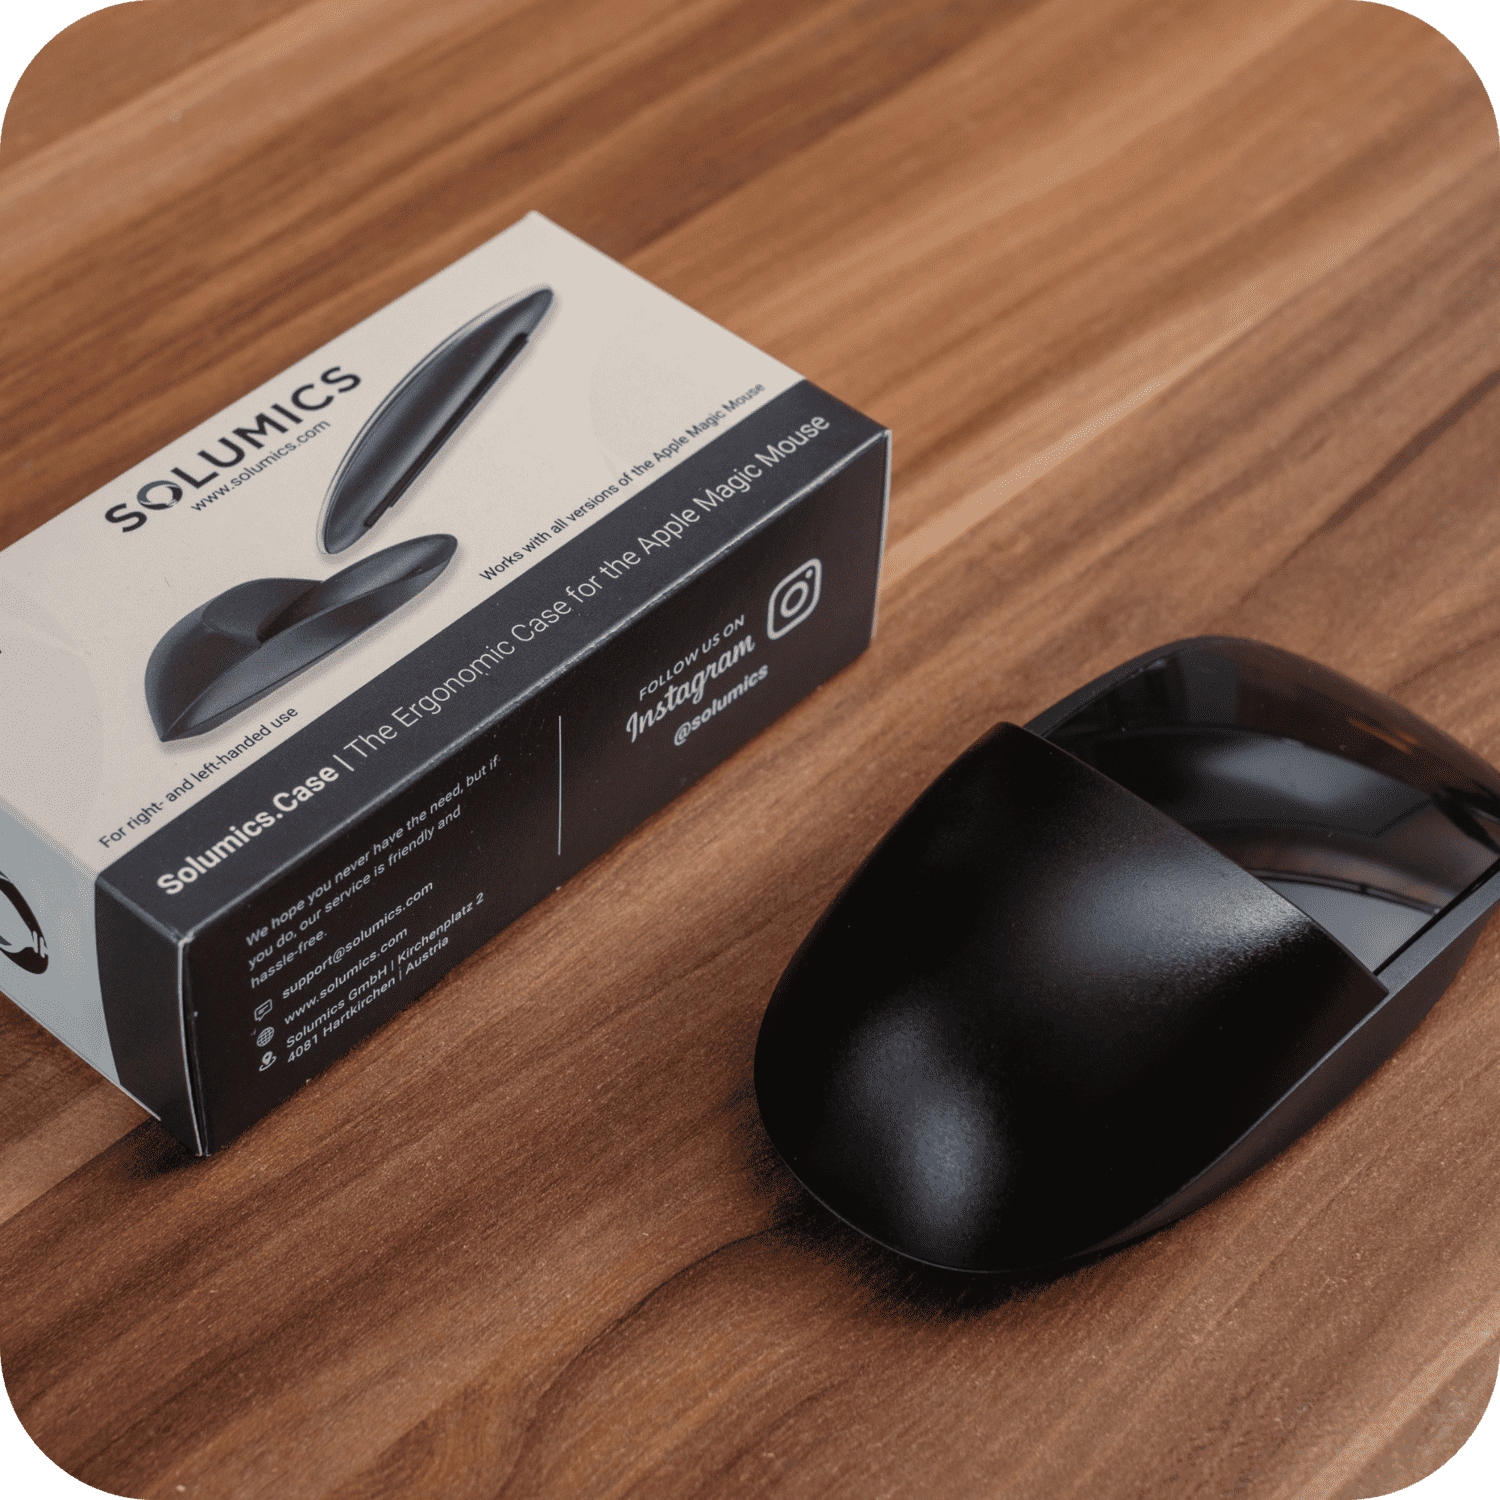 Solumics.Case - Optimisation ergonomique de la souris iMac